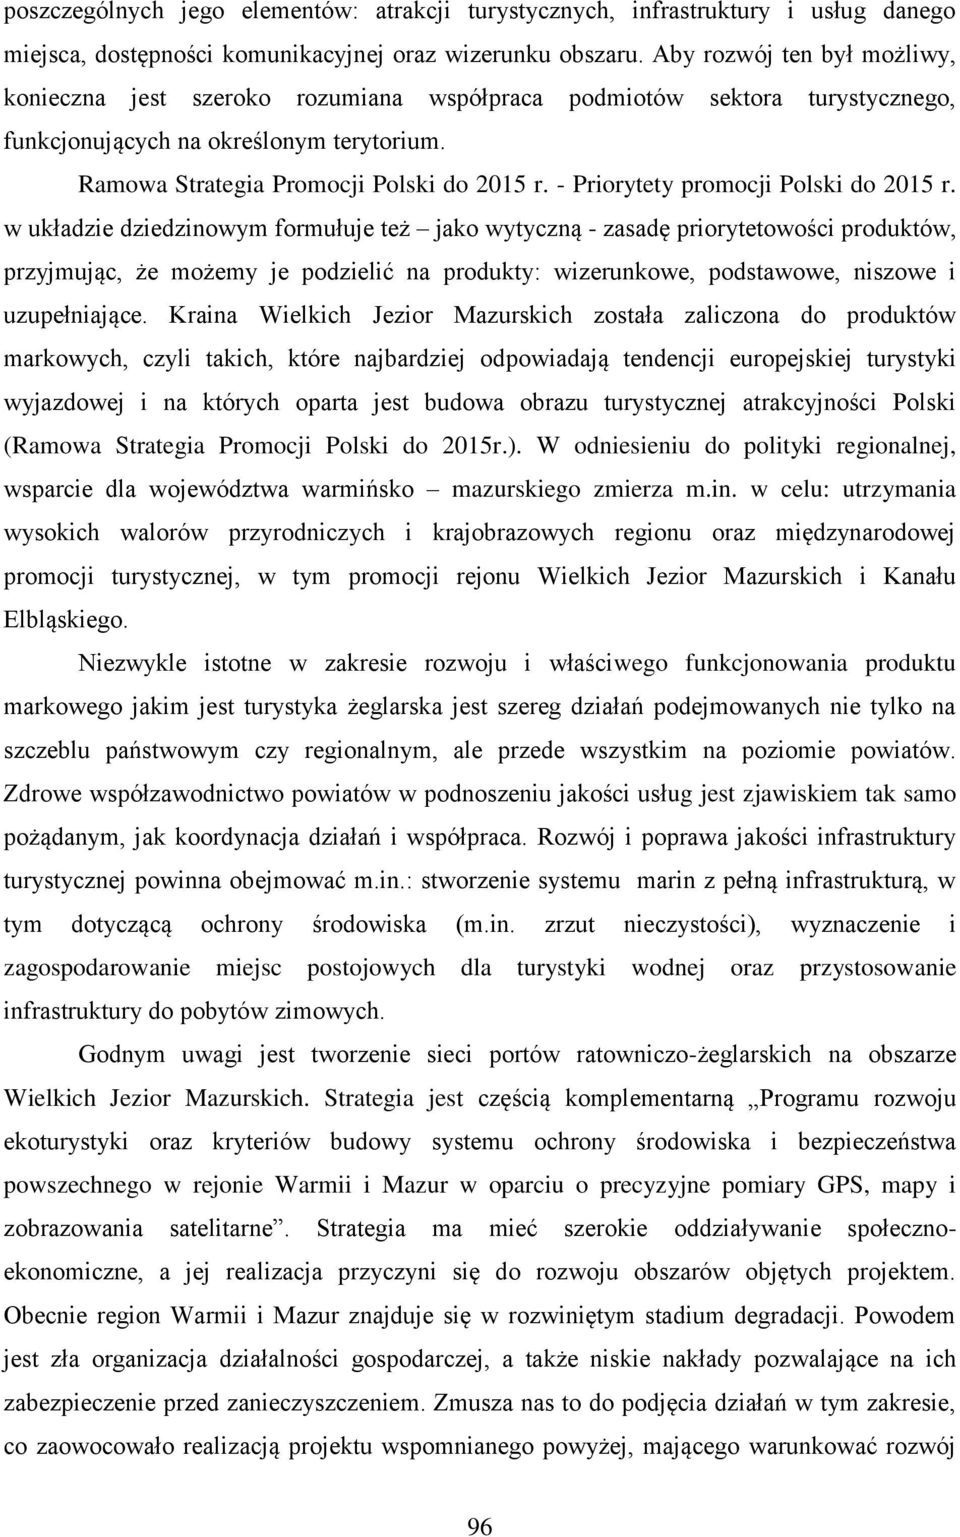 - Priorytety promocji Polski do 2015 r.